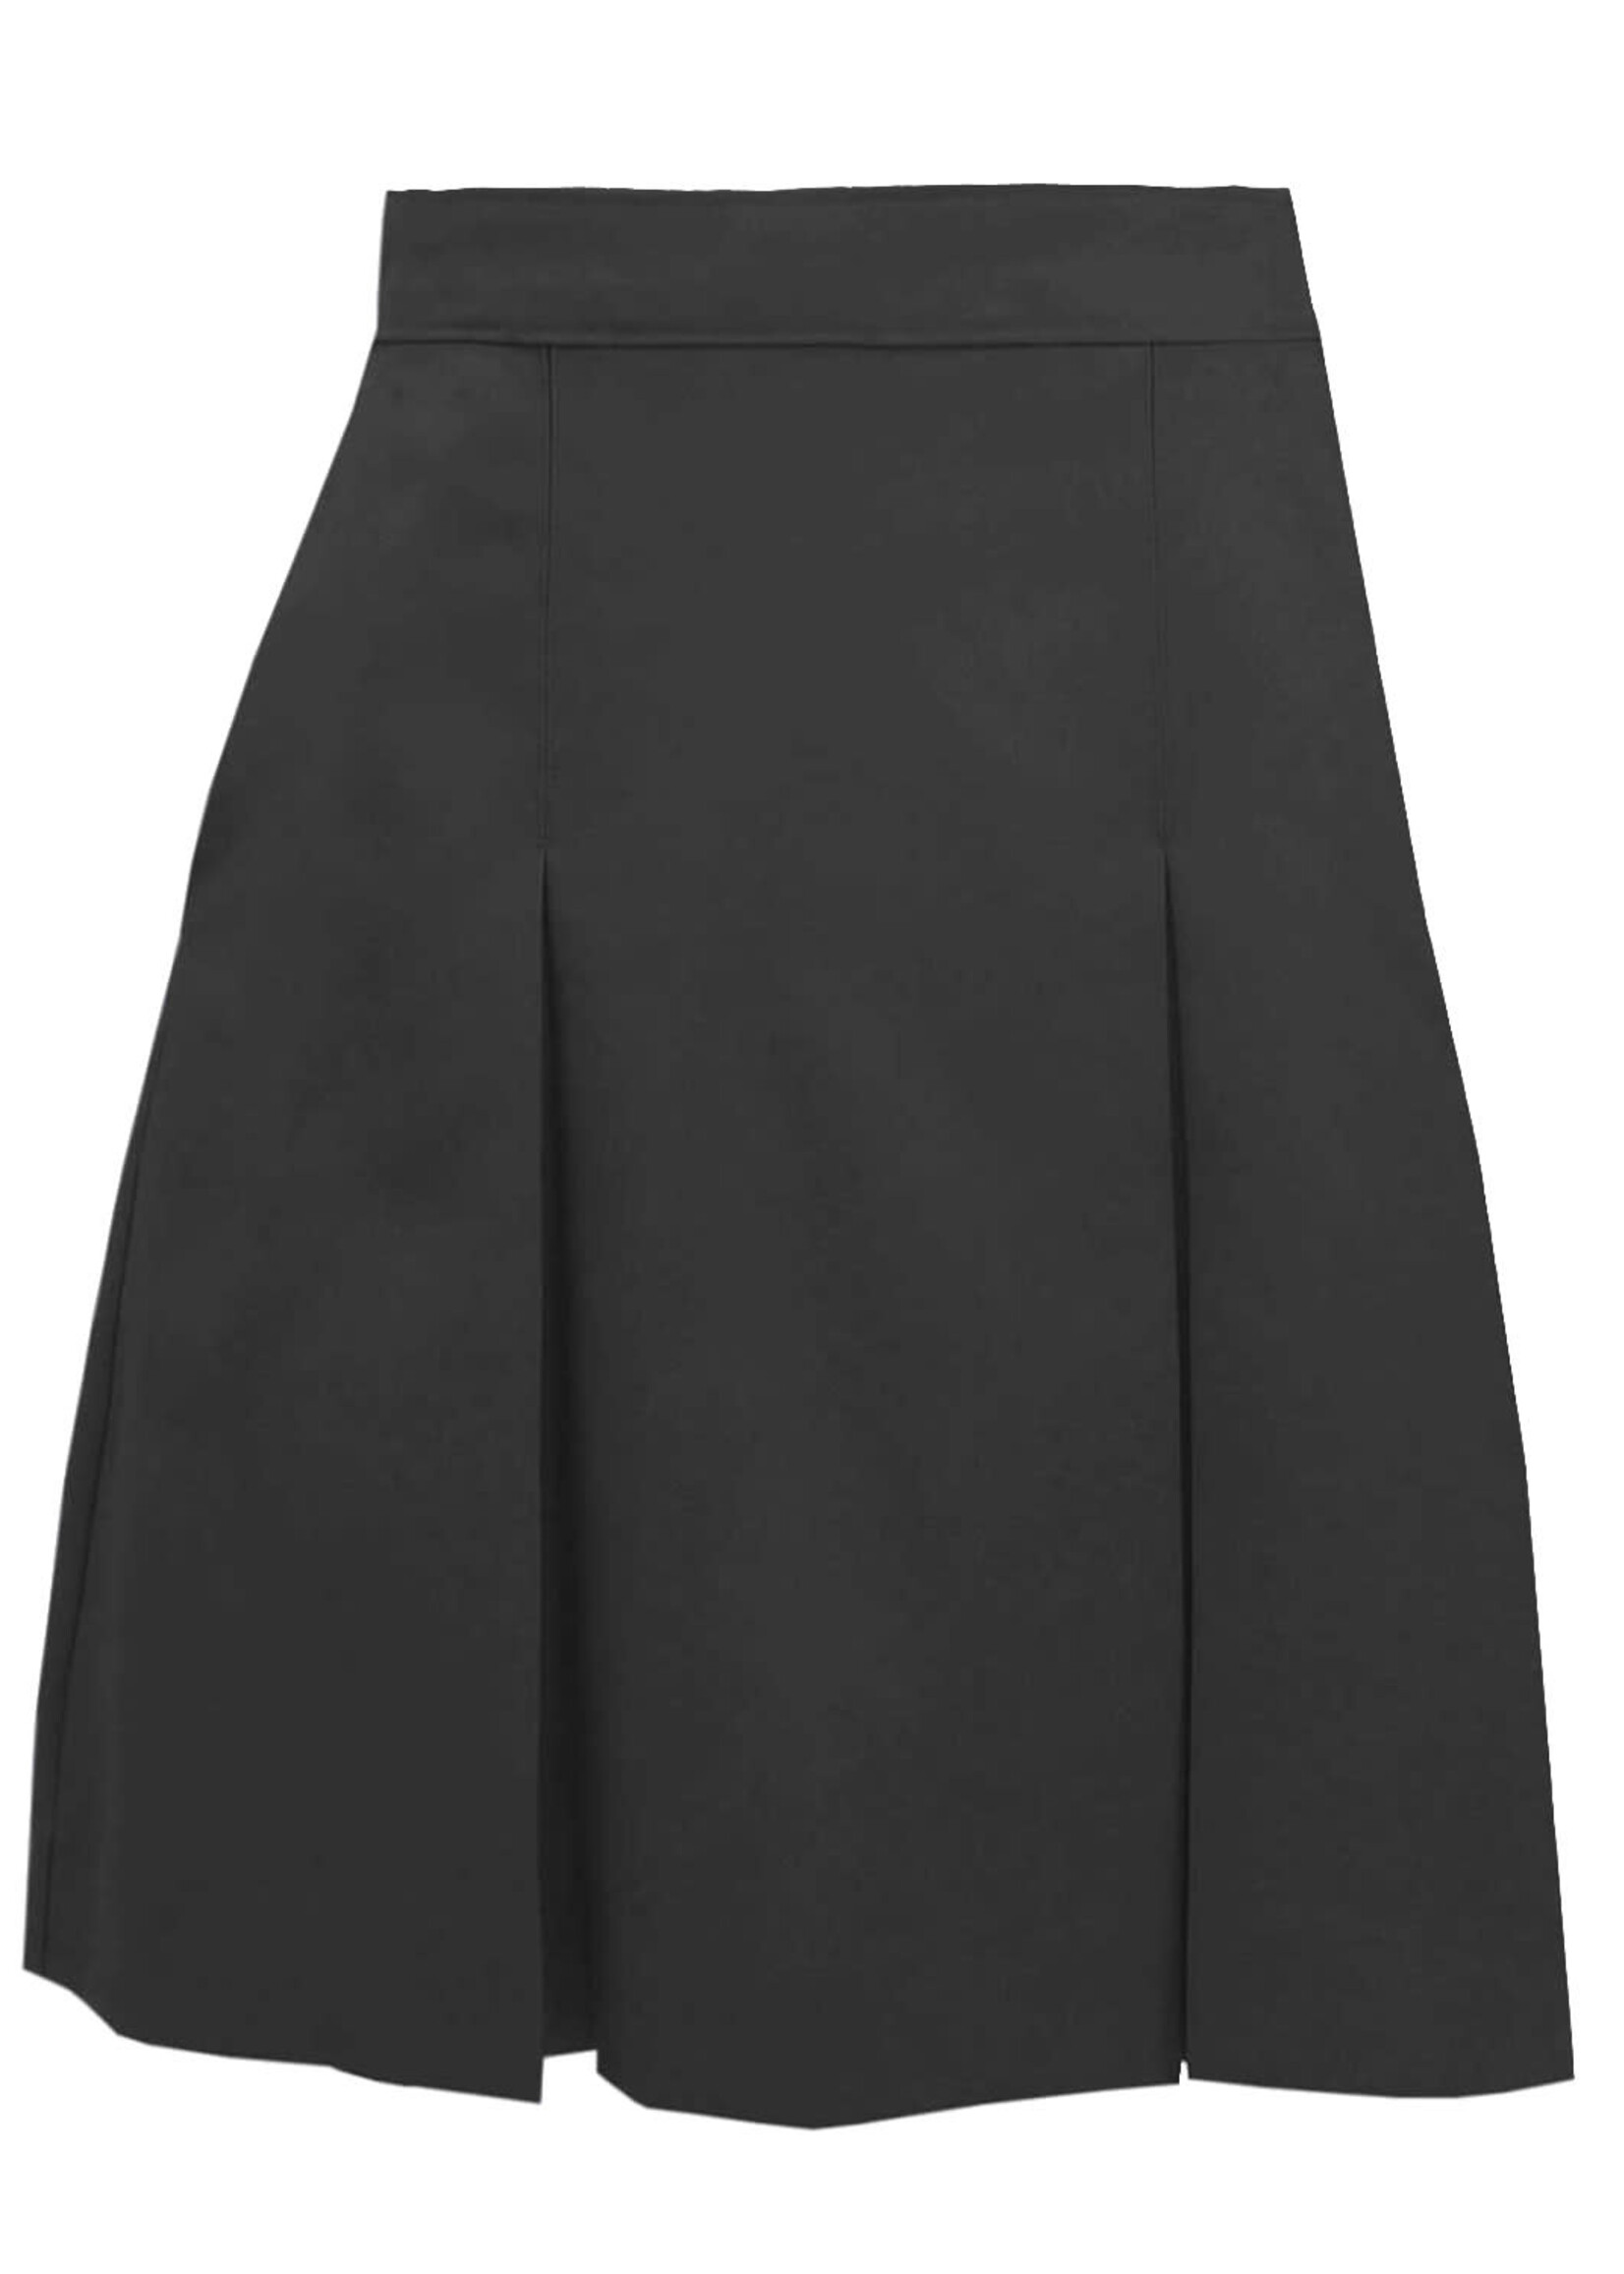 1034 Solid Skirt 4 Pleat (MG) Medium Grey - The Uniform Store